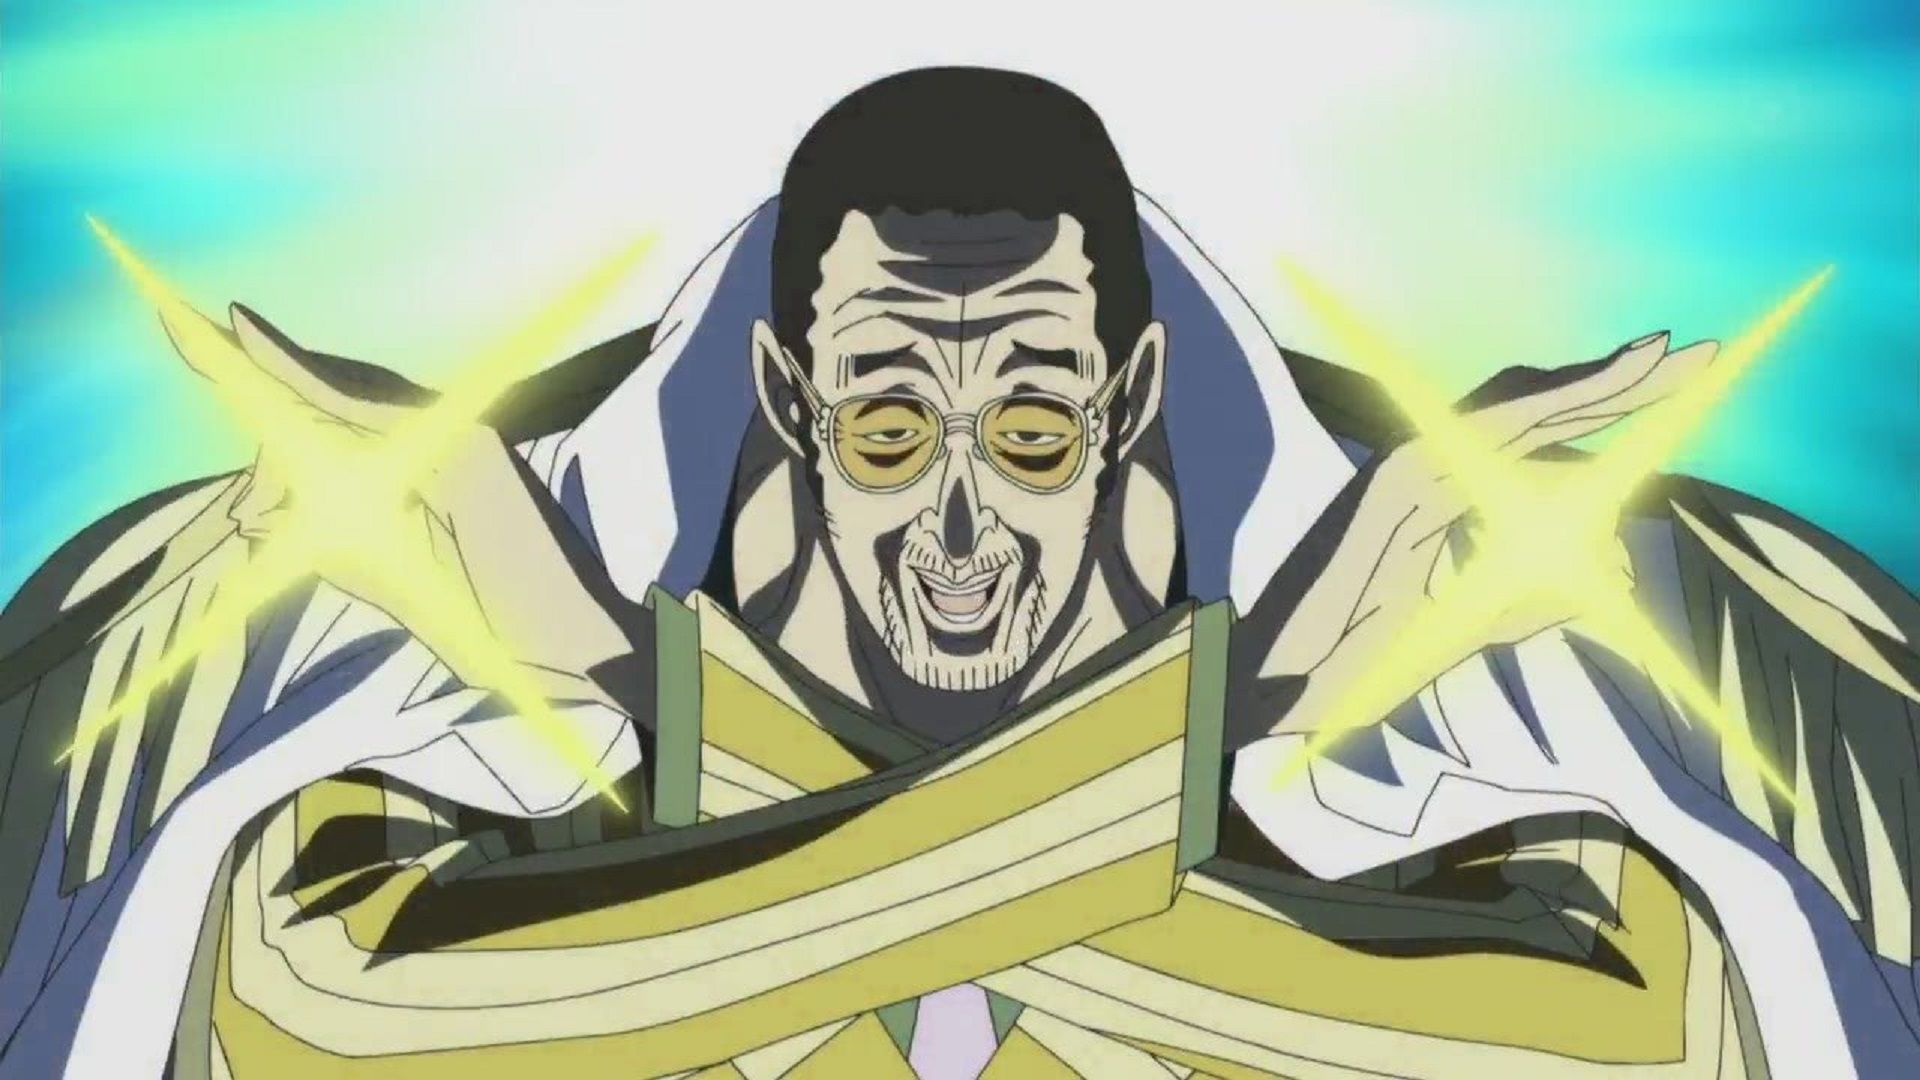 Kizaru as seen in One Piece (Image via Toei Animation, One Piece)